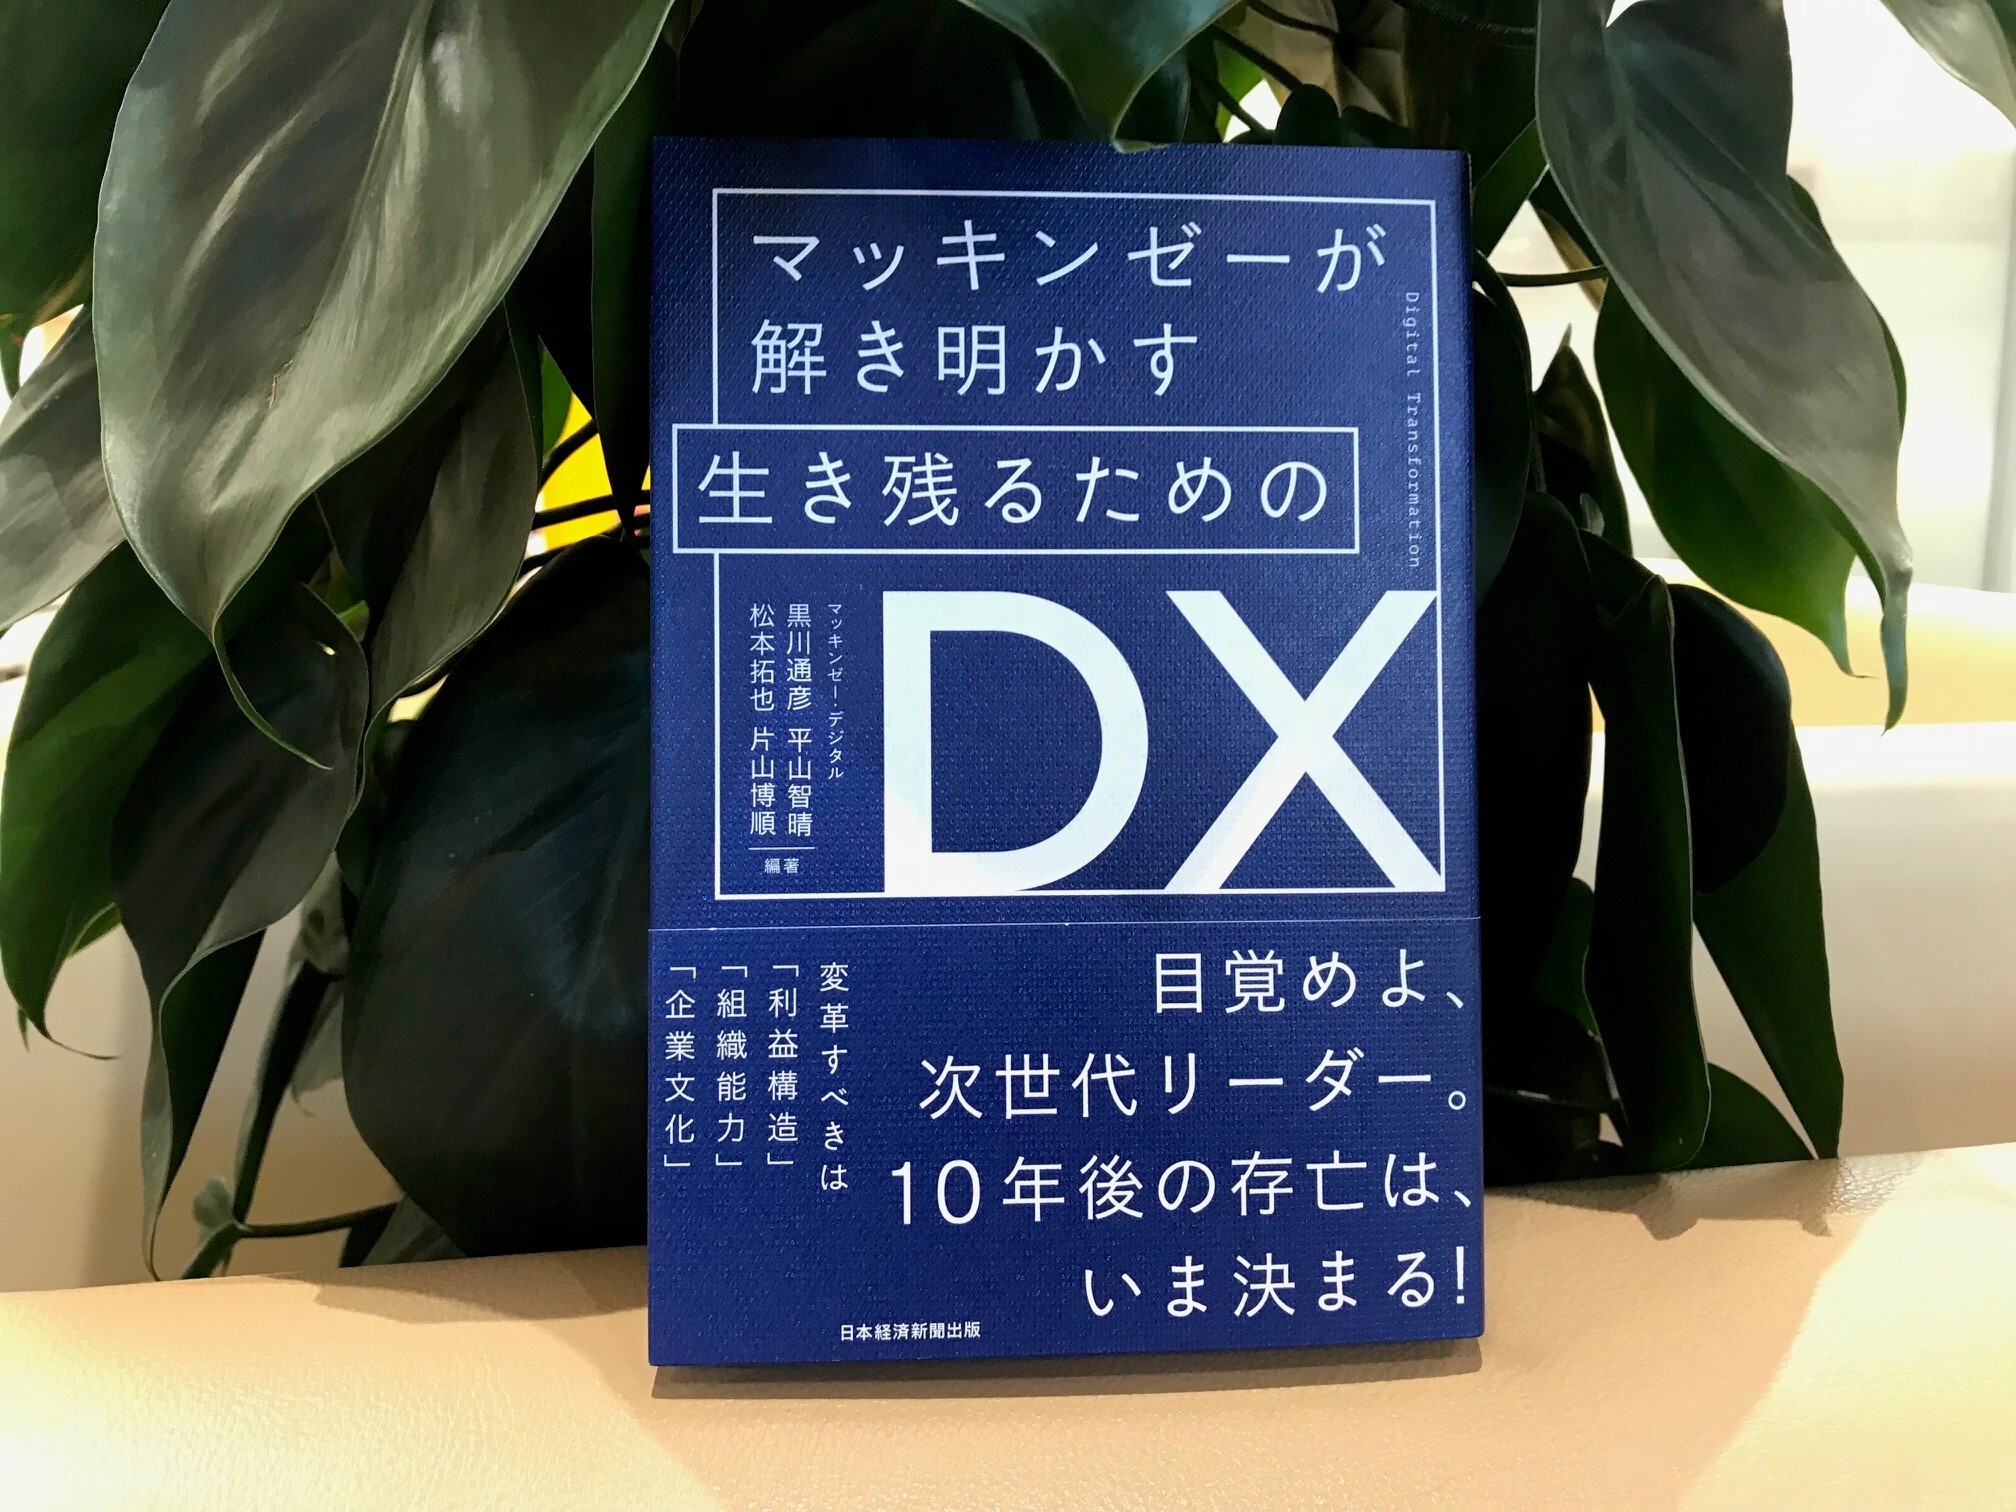 DXを成功に導くには企業の組織文化の変革が必要だ